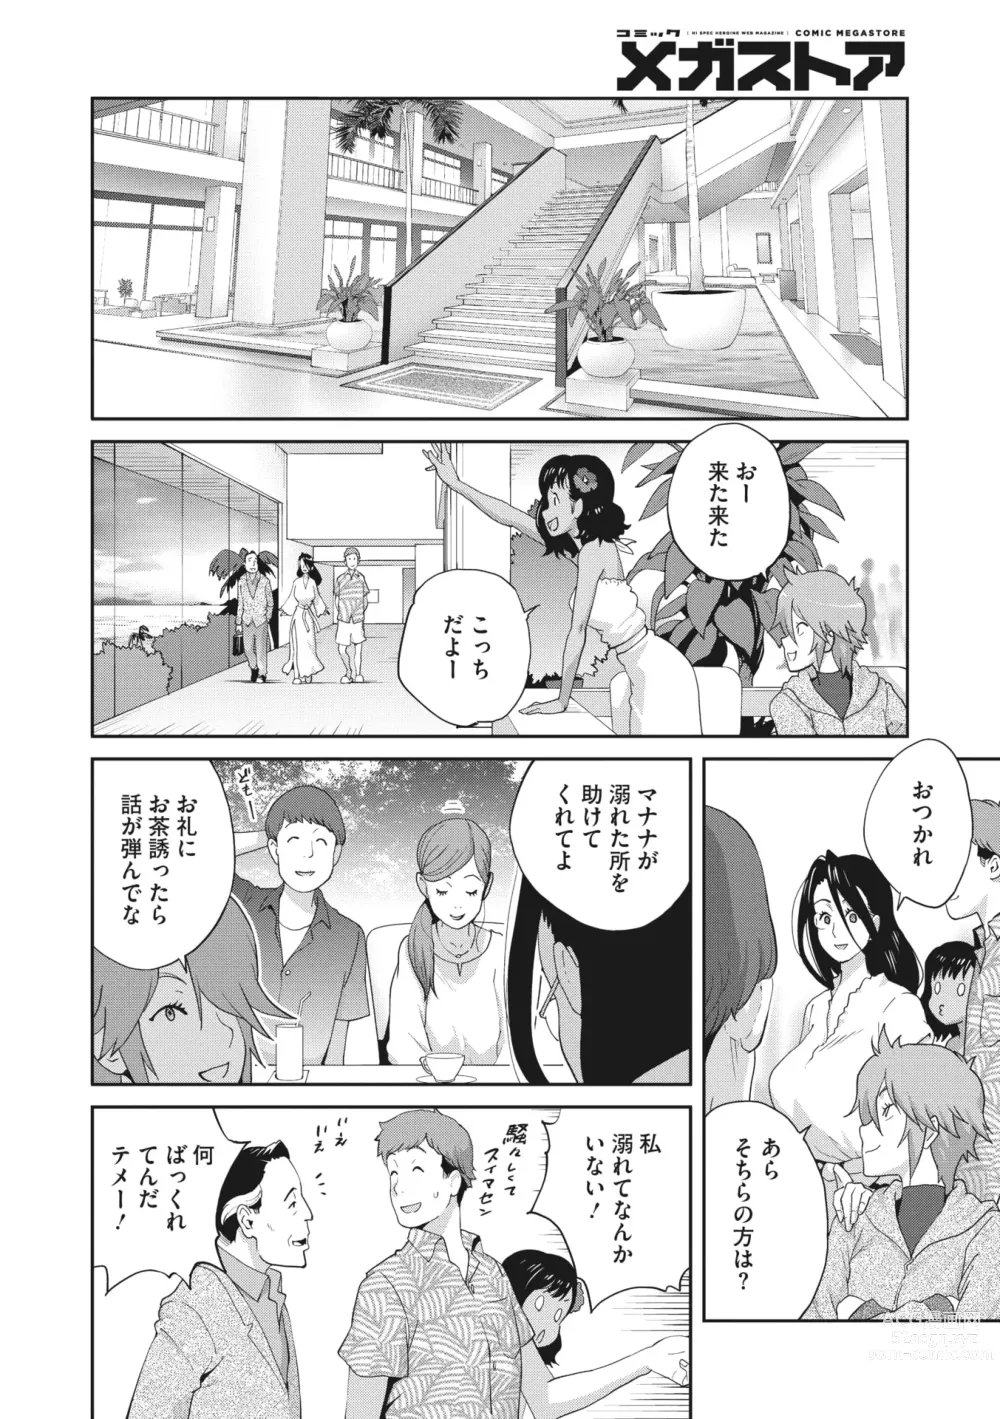 Page 78 of manga Kimama Tawawa Manana 1-4